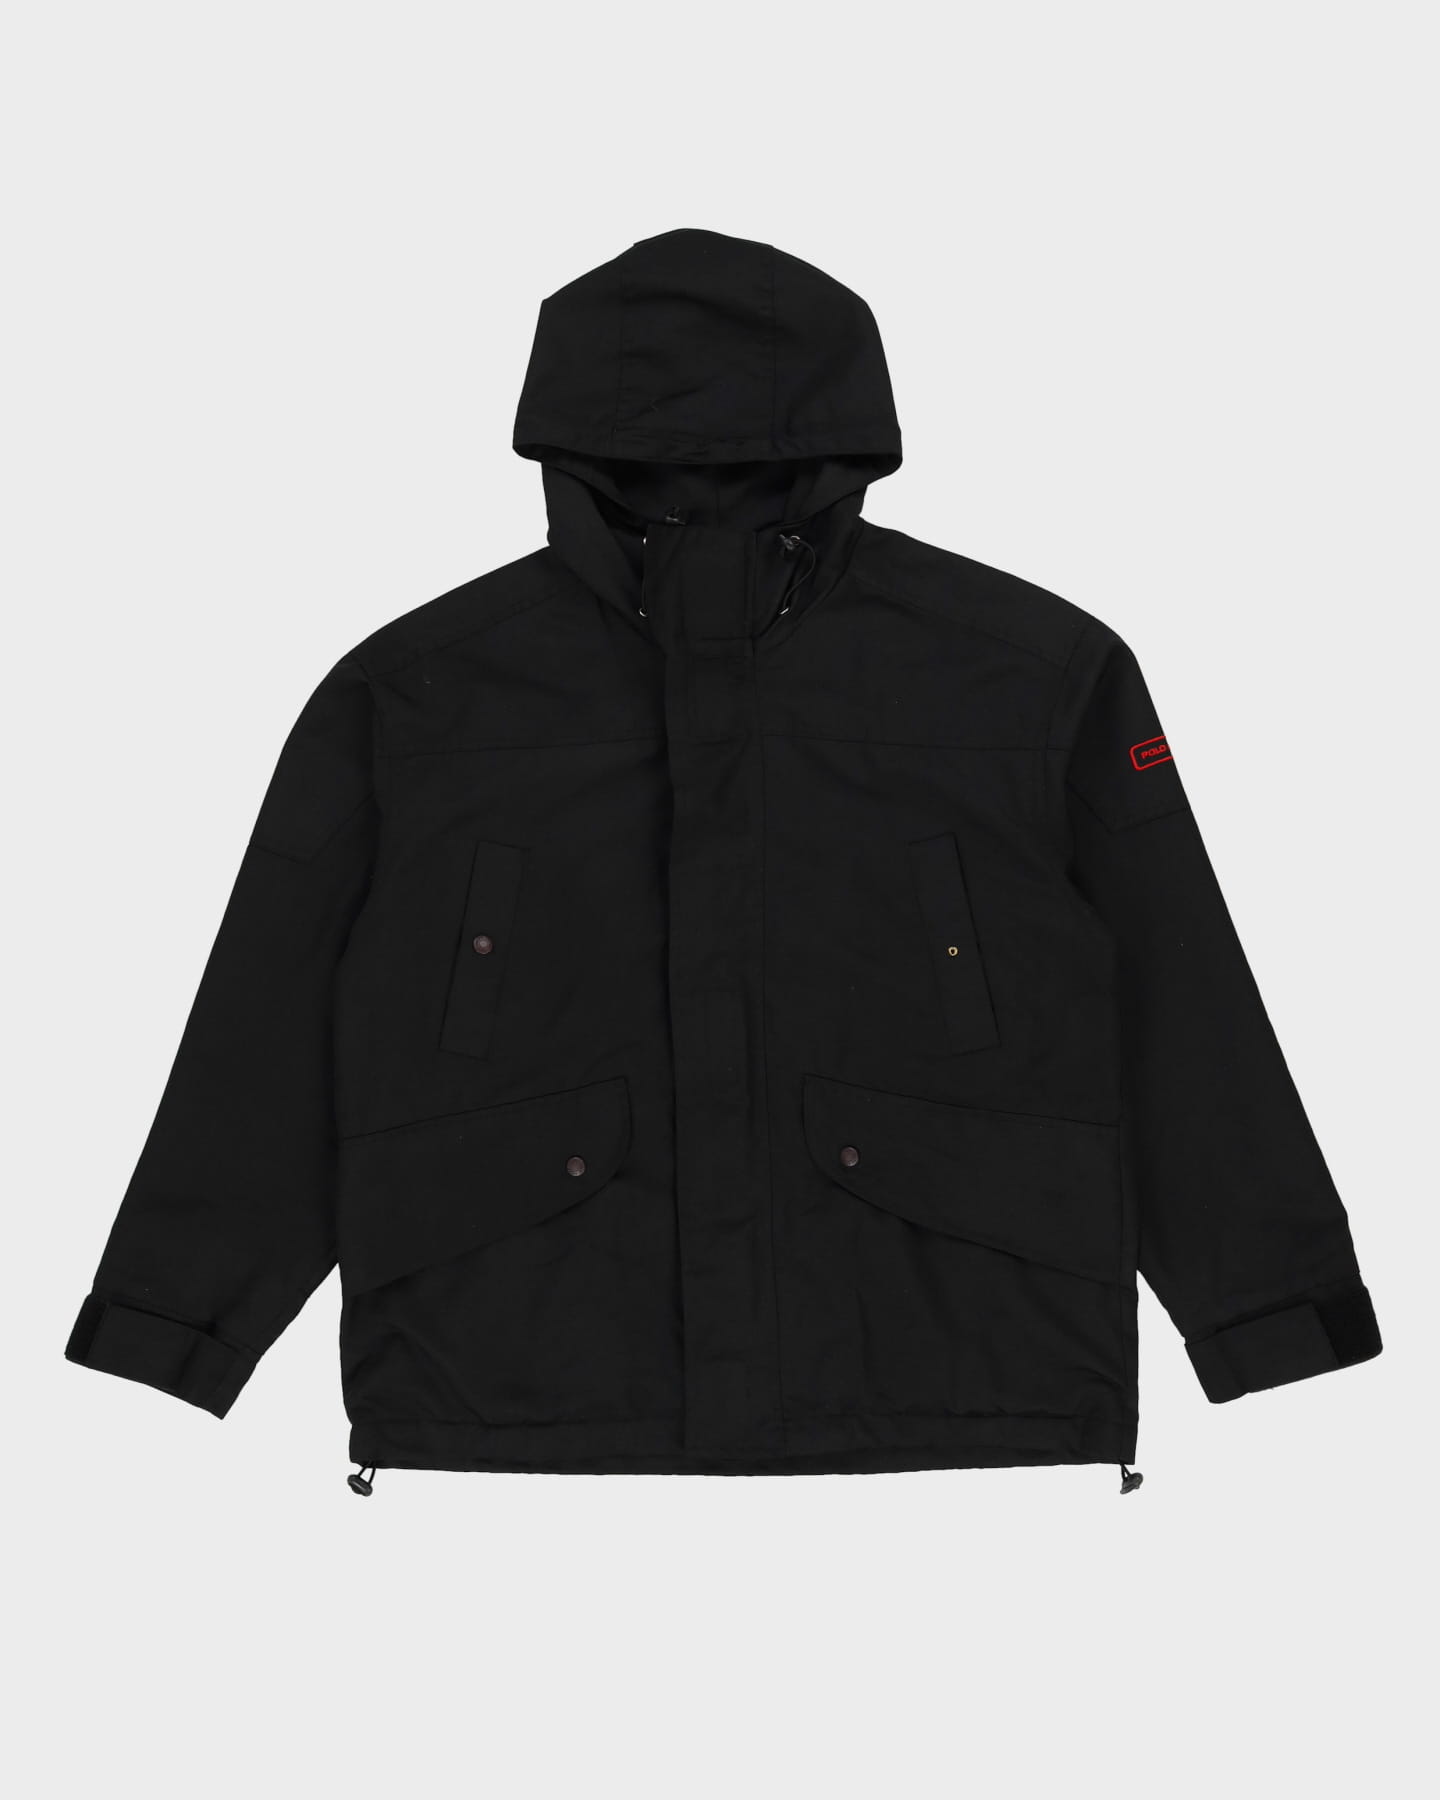 Ralph Lauren Polo Sports Black Hooded Anorak Jacket - XL